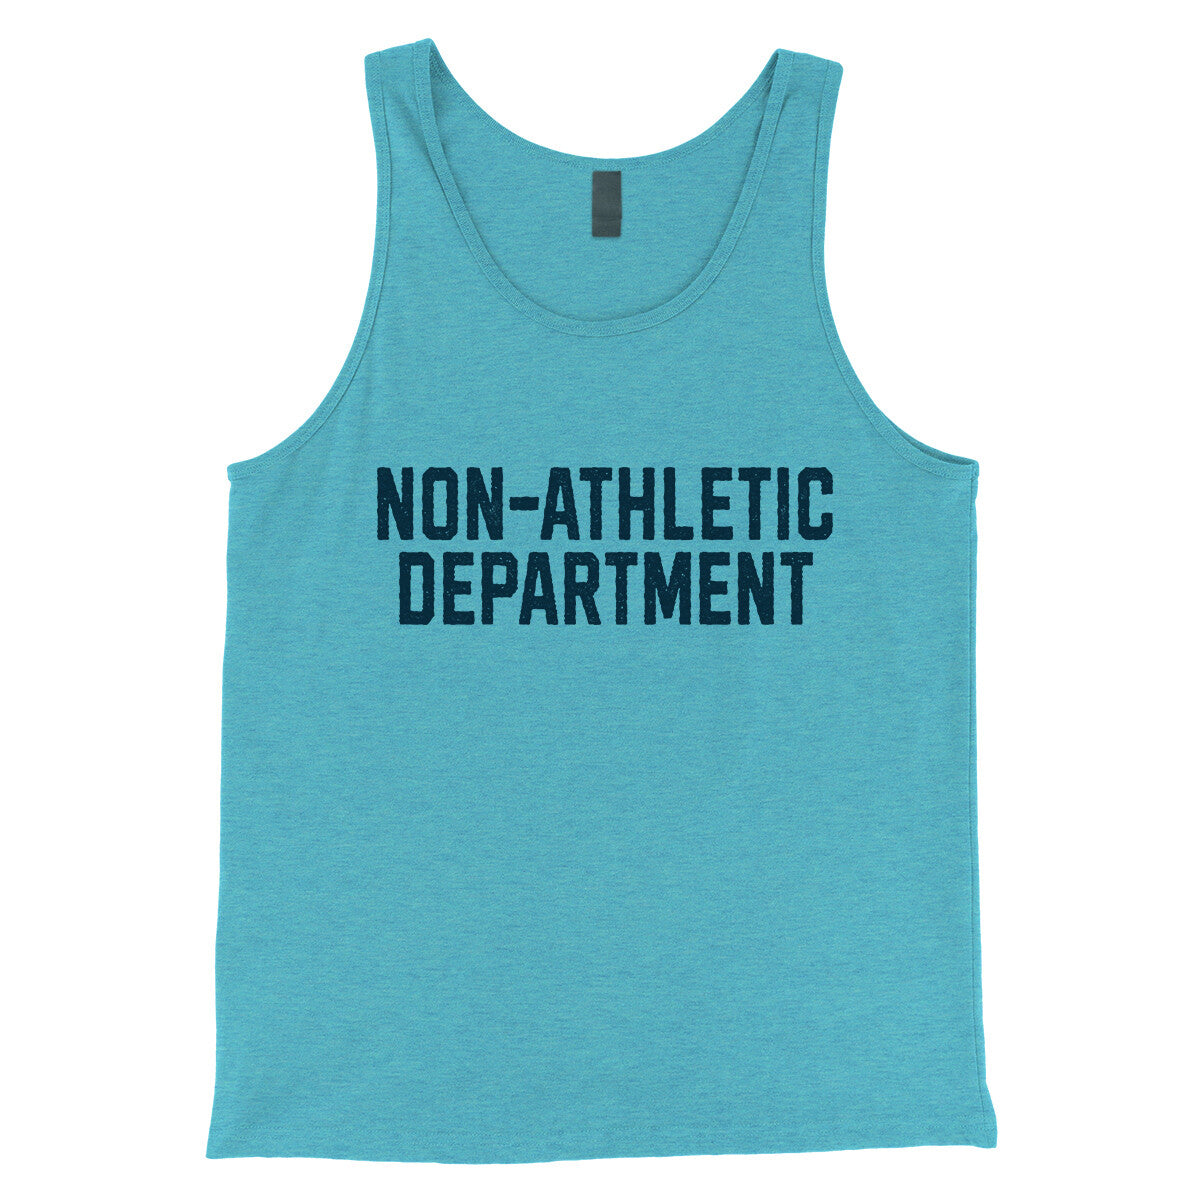 Non-Athletic Department in Aqua Triblend Color